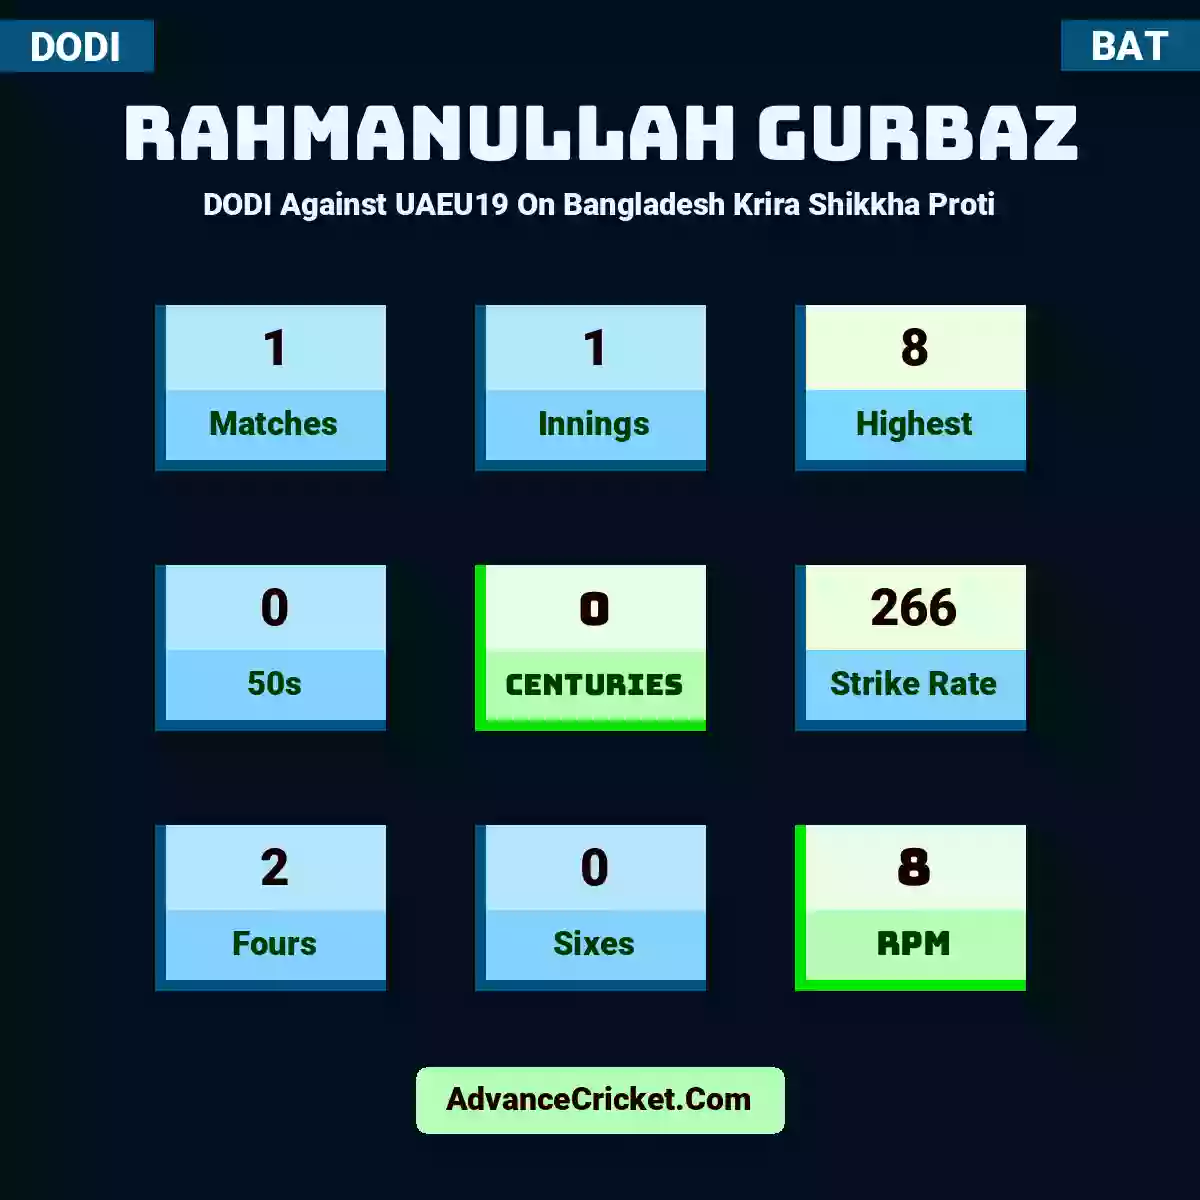 Rahmanullah Gurbaz DODI  Against UAEU19 On Bangladesh Krira Shikkha Proti, Rahmanullah Gurbaz played 1 matches, scored 8 runs as highest, 0 half-centuries, and 0 centuries, with a strike rate of 266. R.Gurbaz hit 2 fours and 0 sixes, with an RPM of 8.